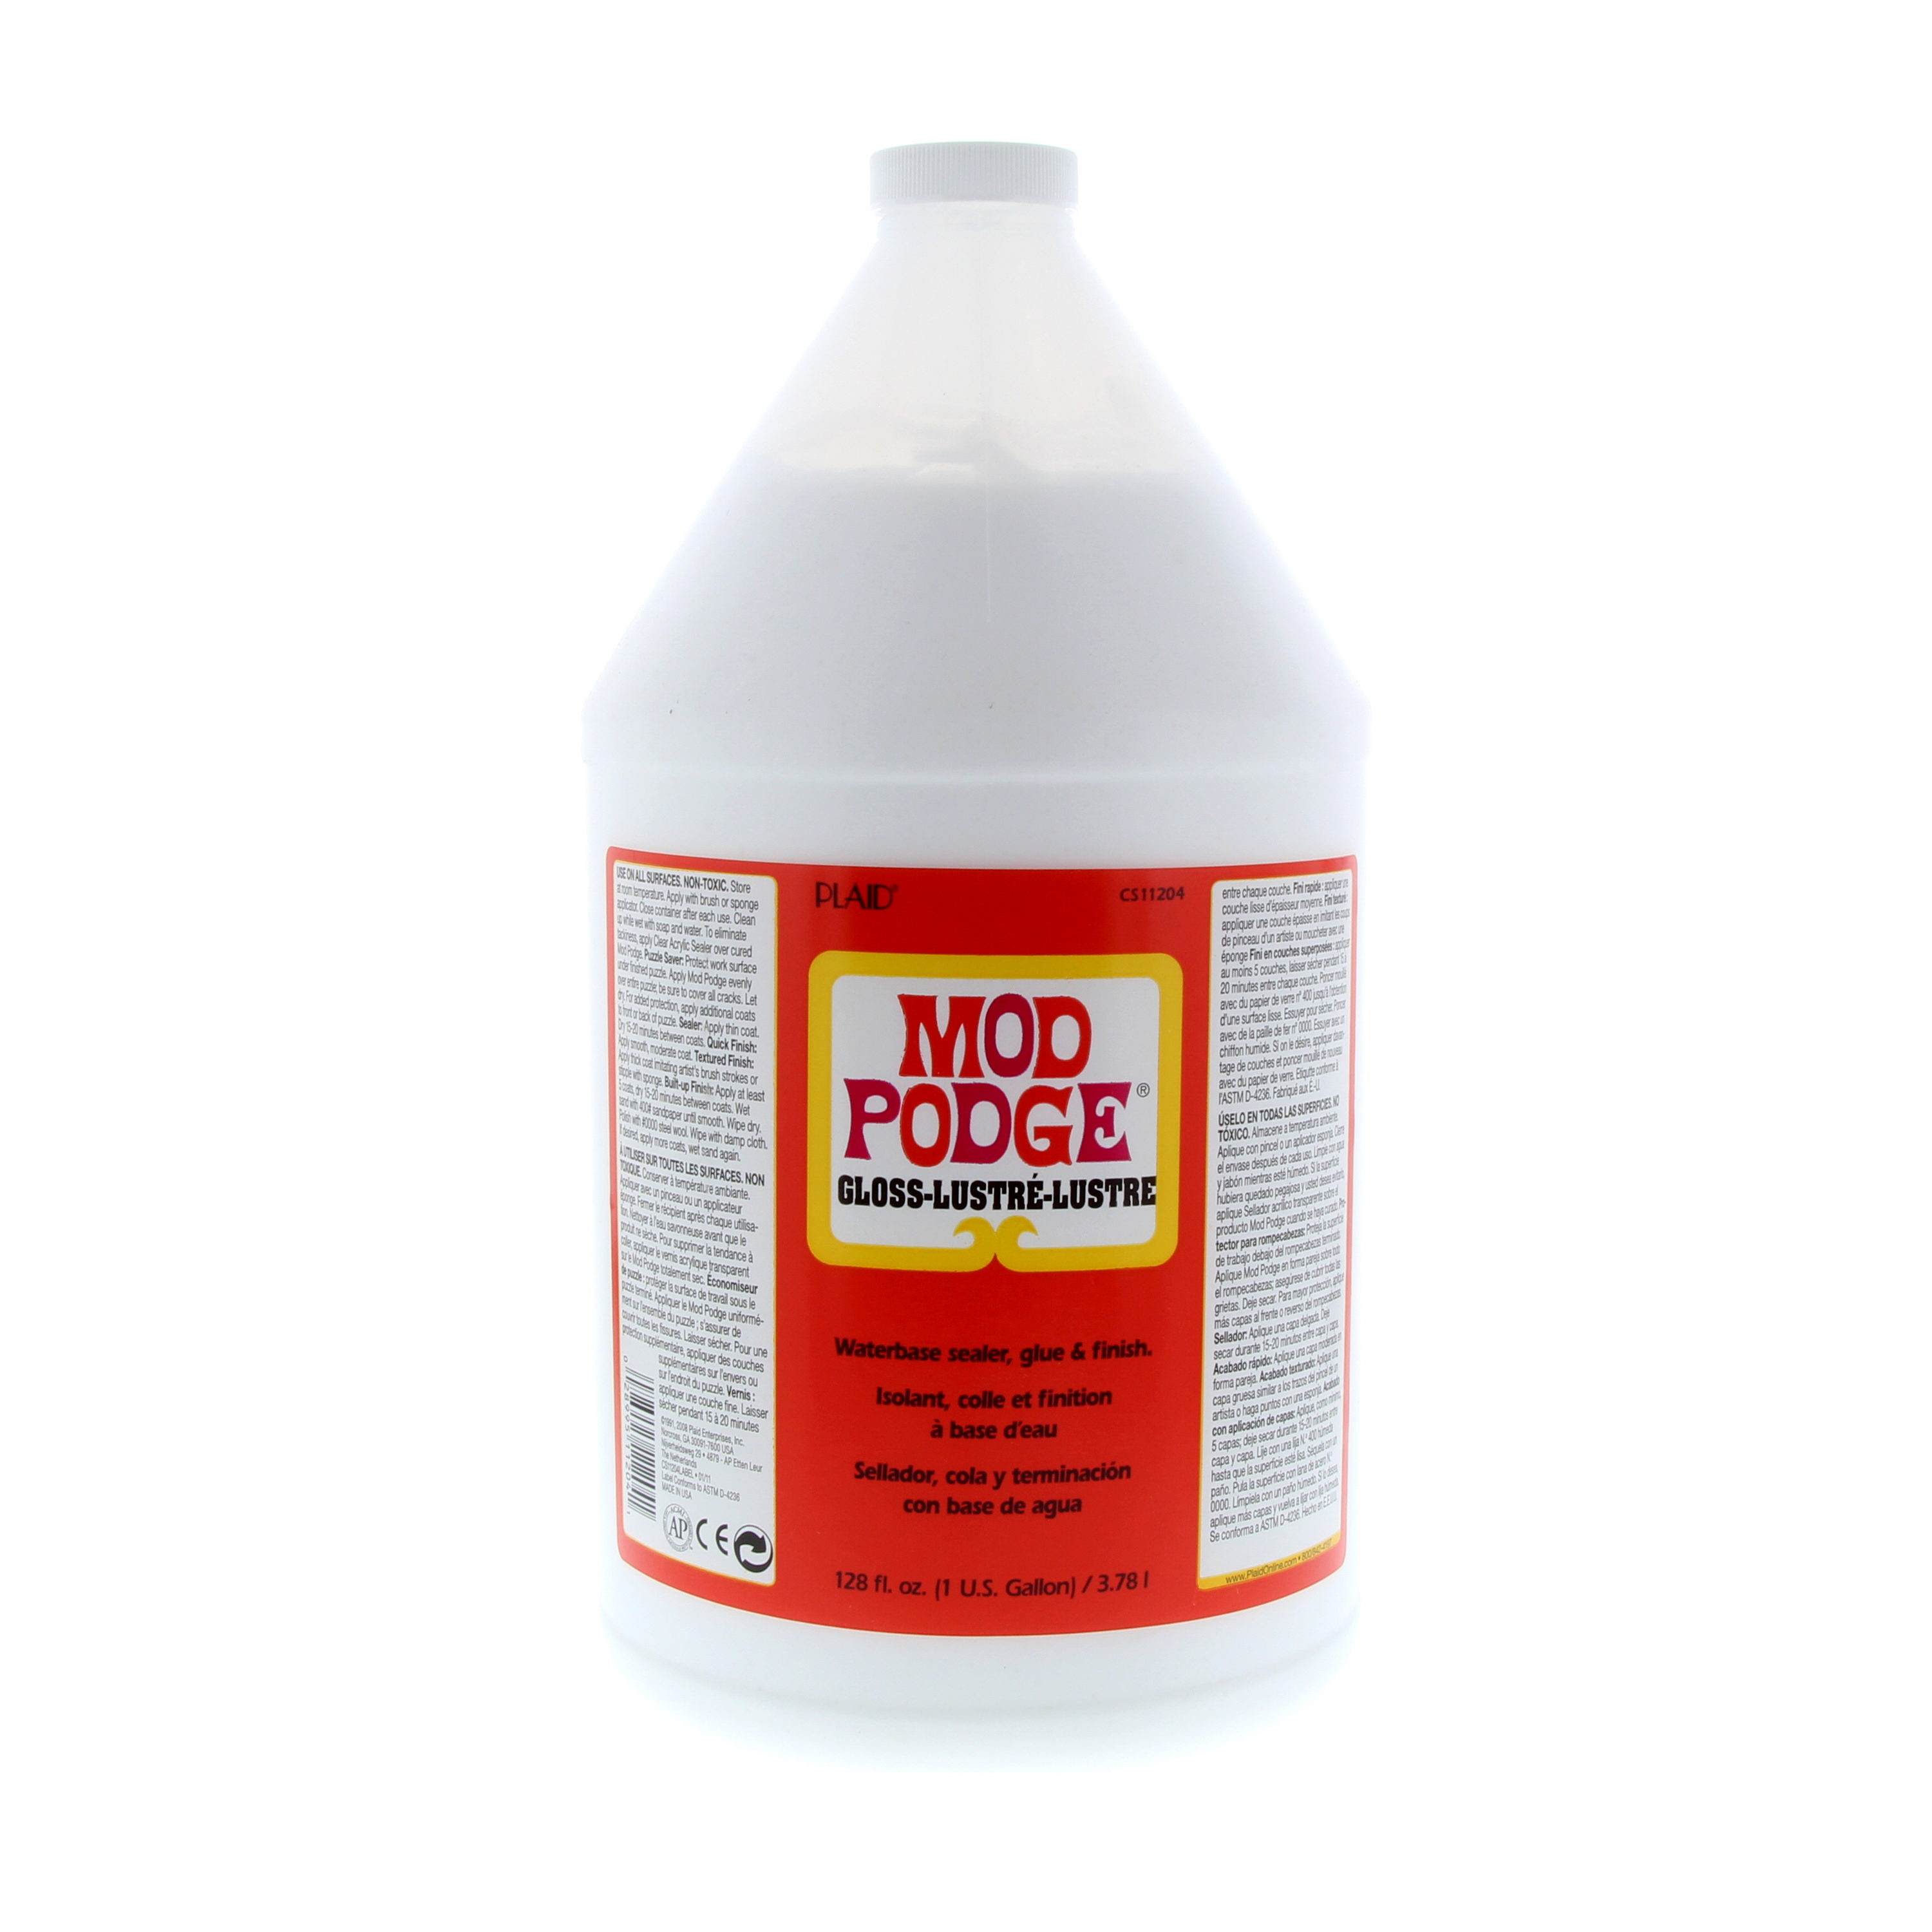 Mod Podge Gloss Lustre Water Based Sealer Glue & Finish All in One